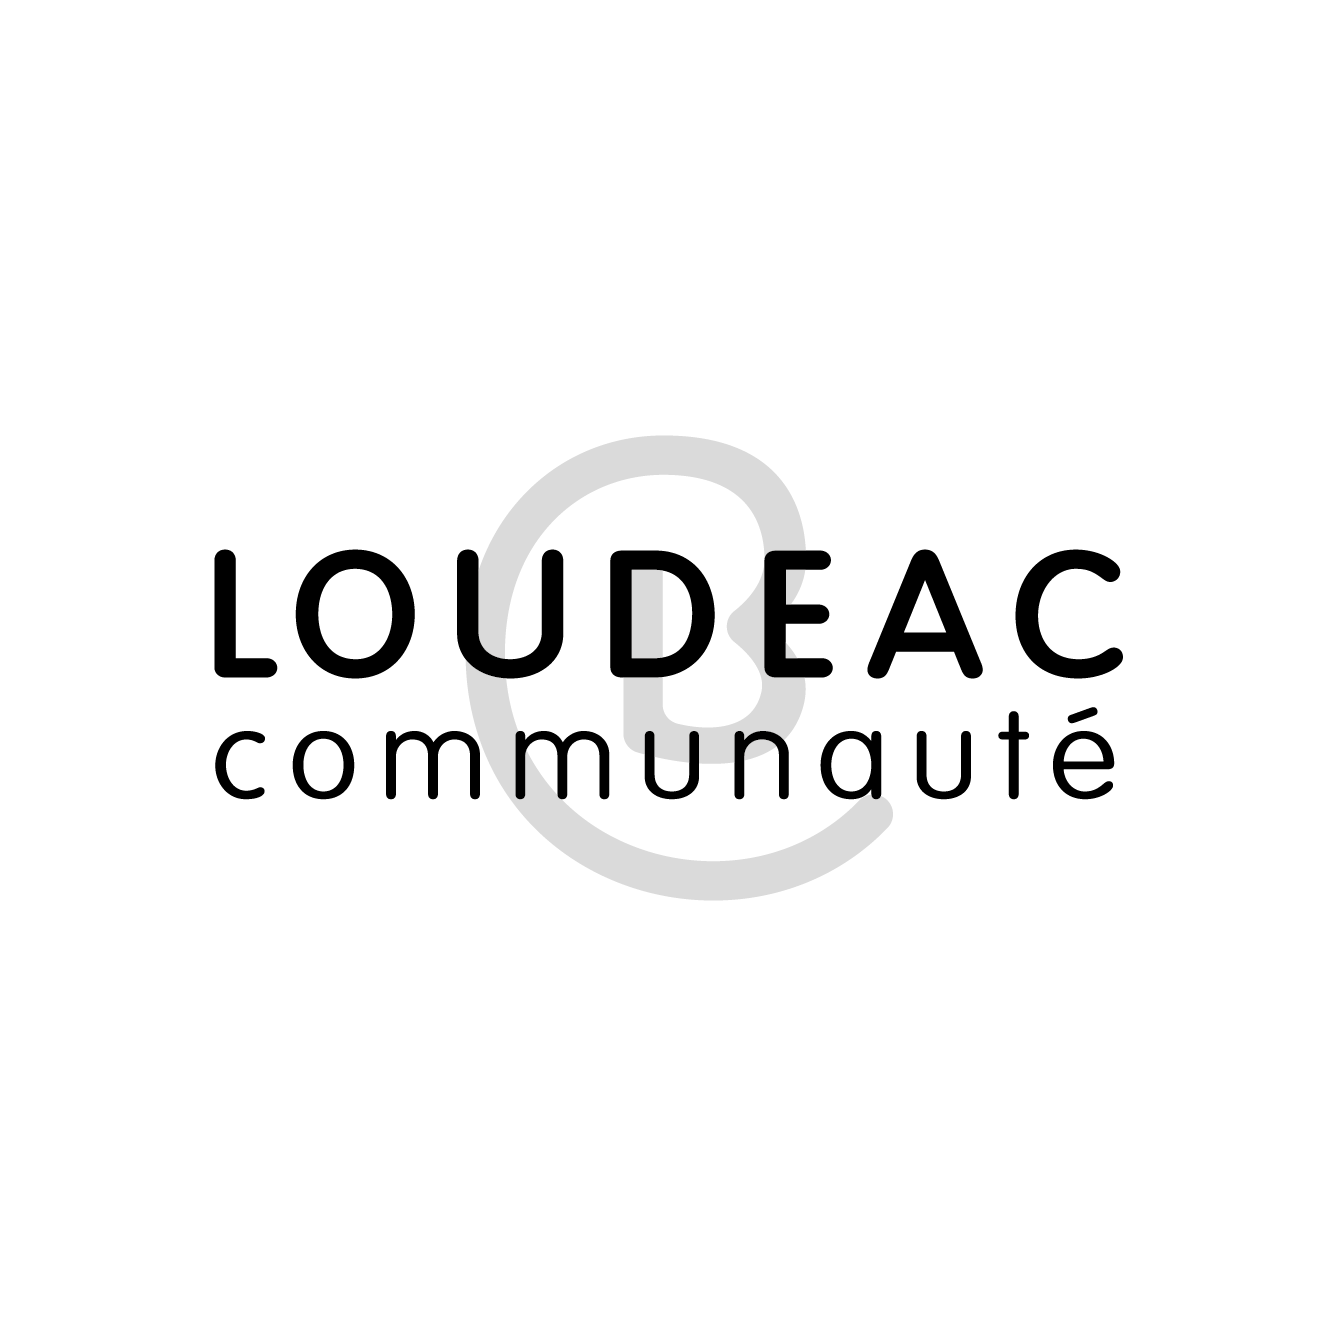 Logo_Loudéac_communauté.png